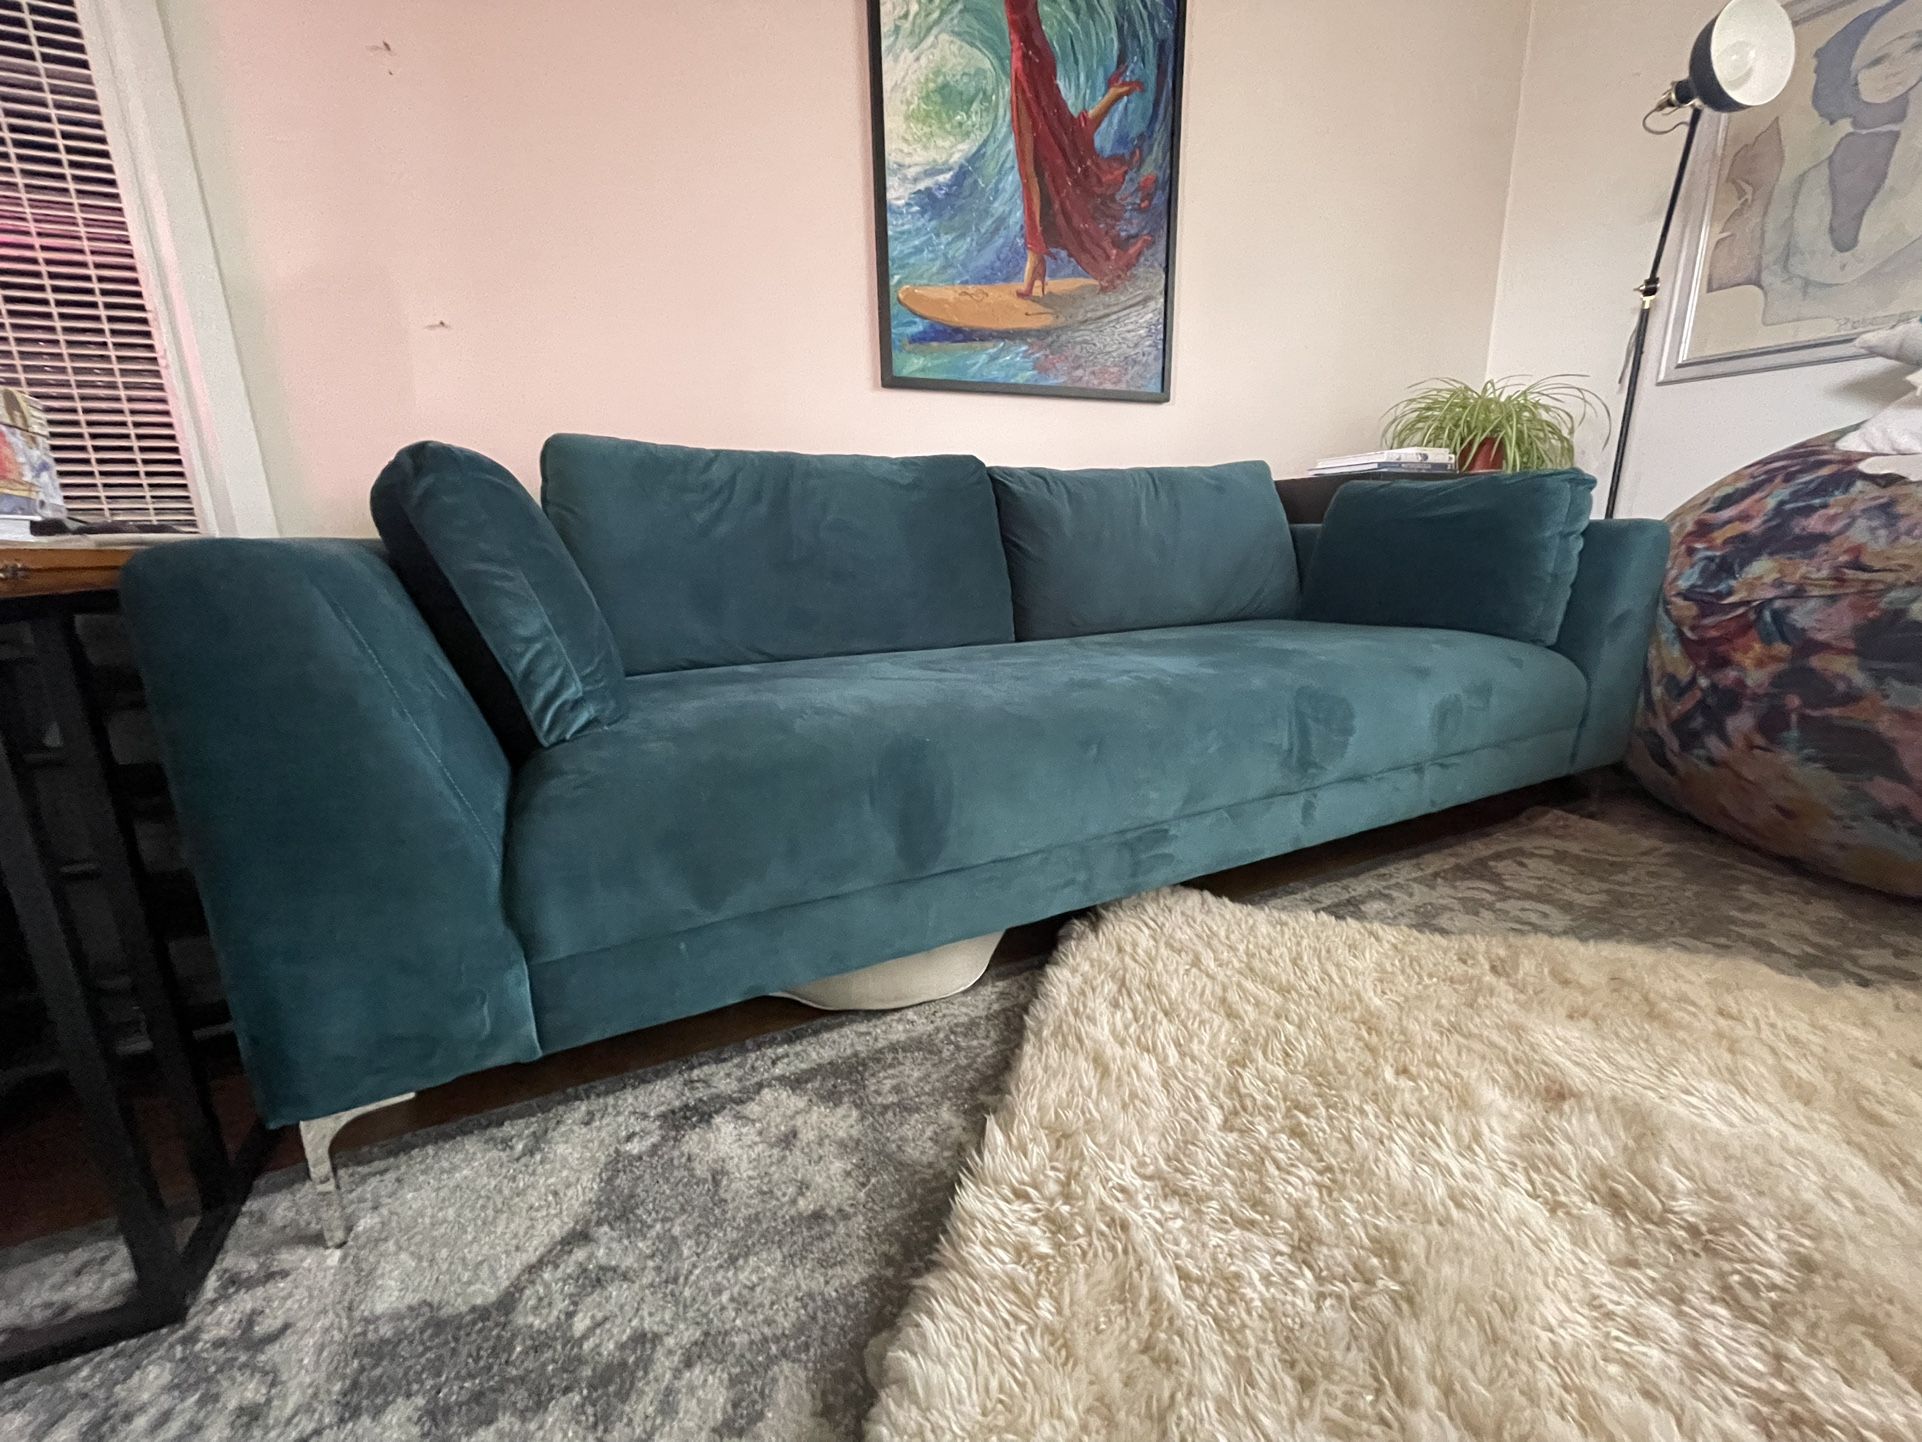 Vintage Inspired Teal Velvet Couch 